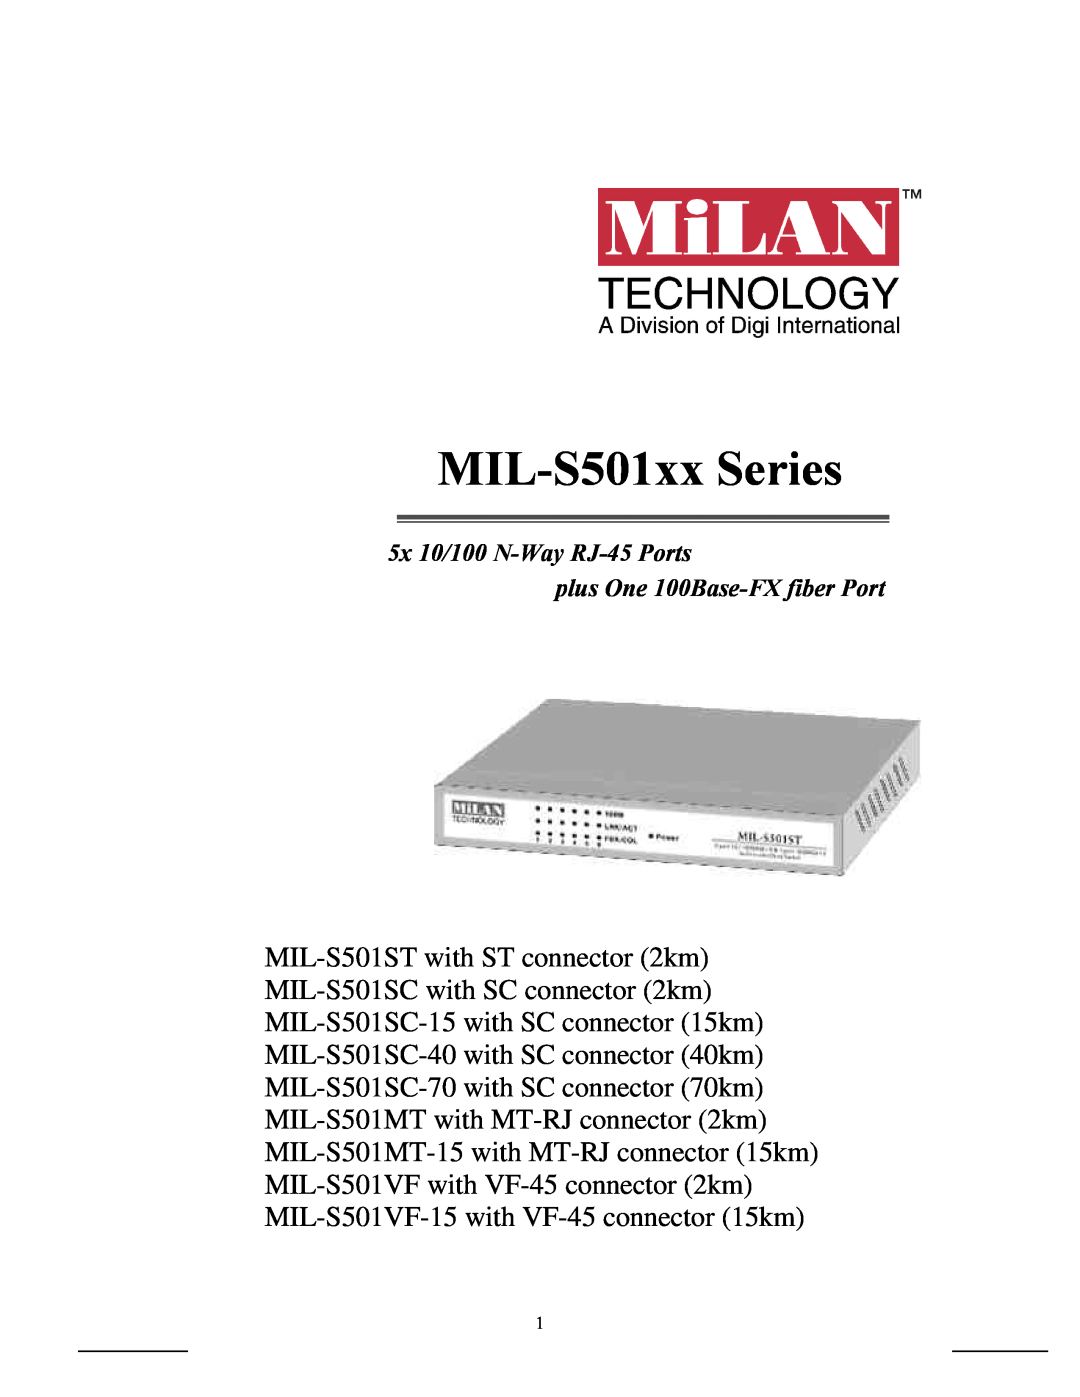 Milan Technology MIL-S501ST manual MIL-S501xx Series, 5x 10/100 N-Way RJ-45 Ports plus One 100Base-FX fiber Port 